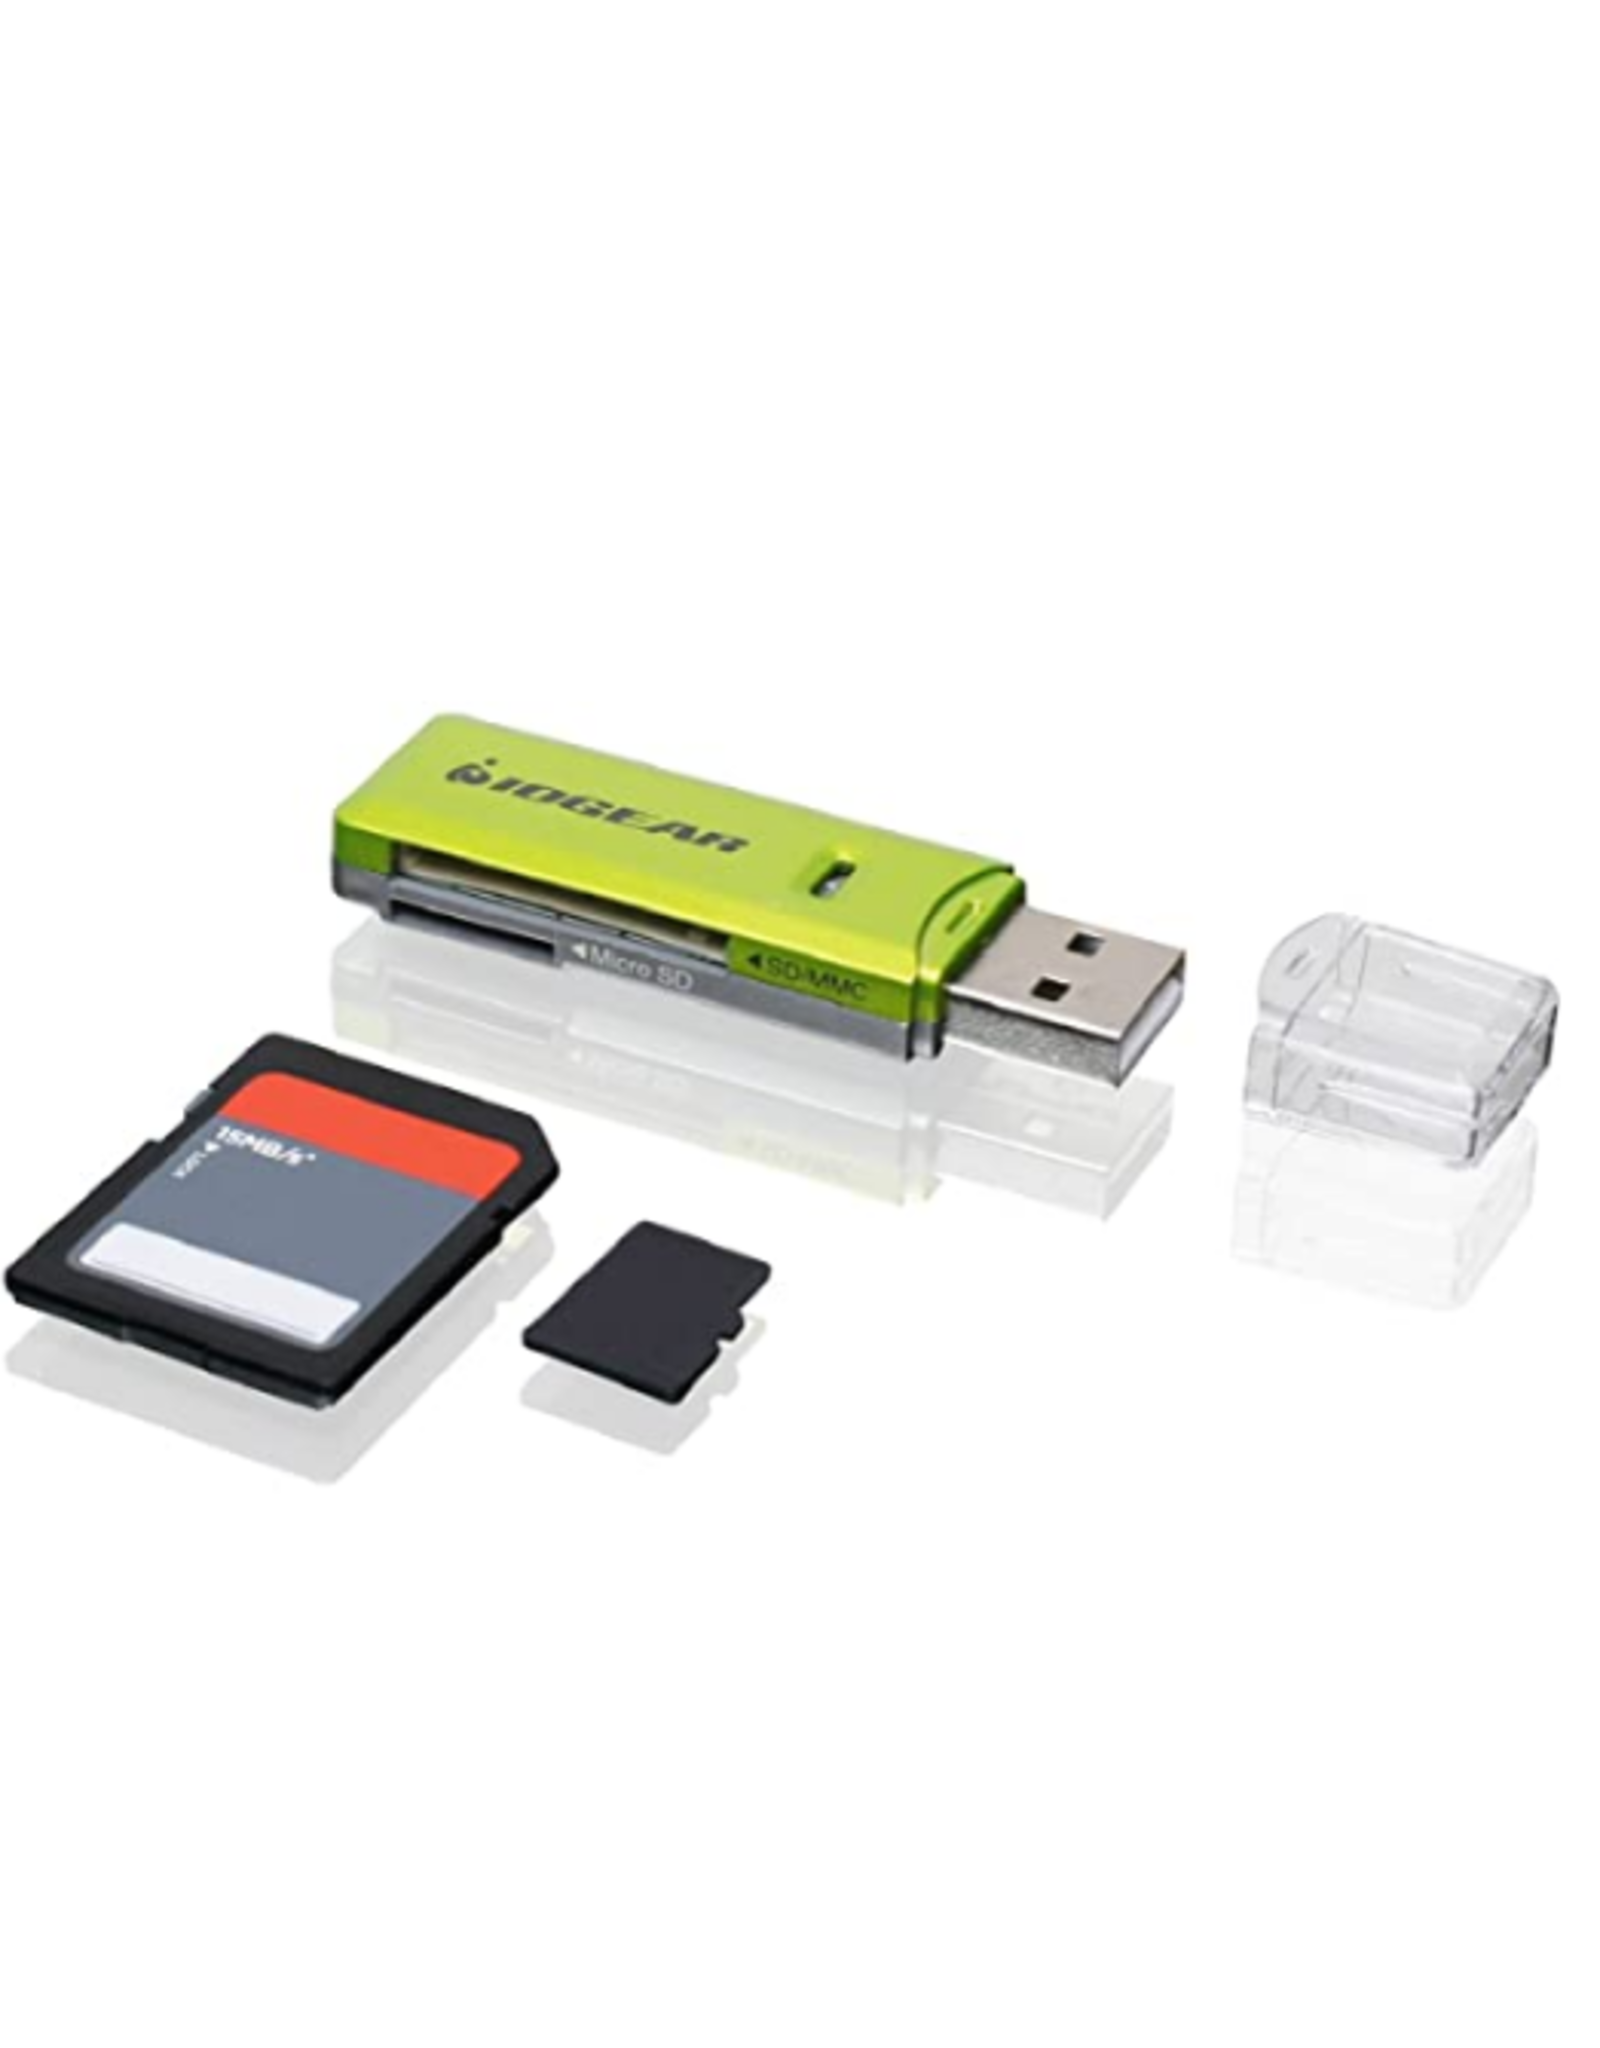 IOGEAR IOGEAR SD/MicroSD/MMC Card Reader/Writer GFR204SD - card reader - Hi-Speed